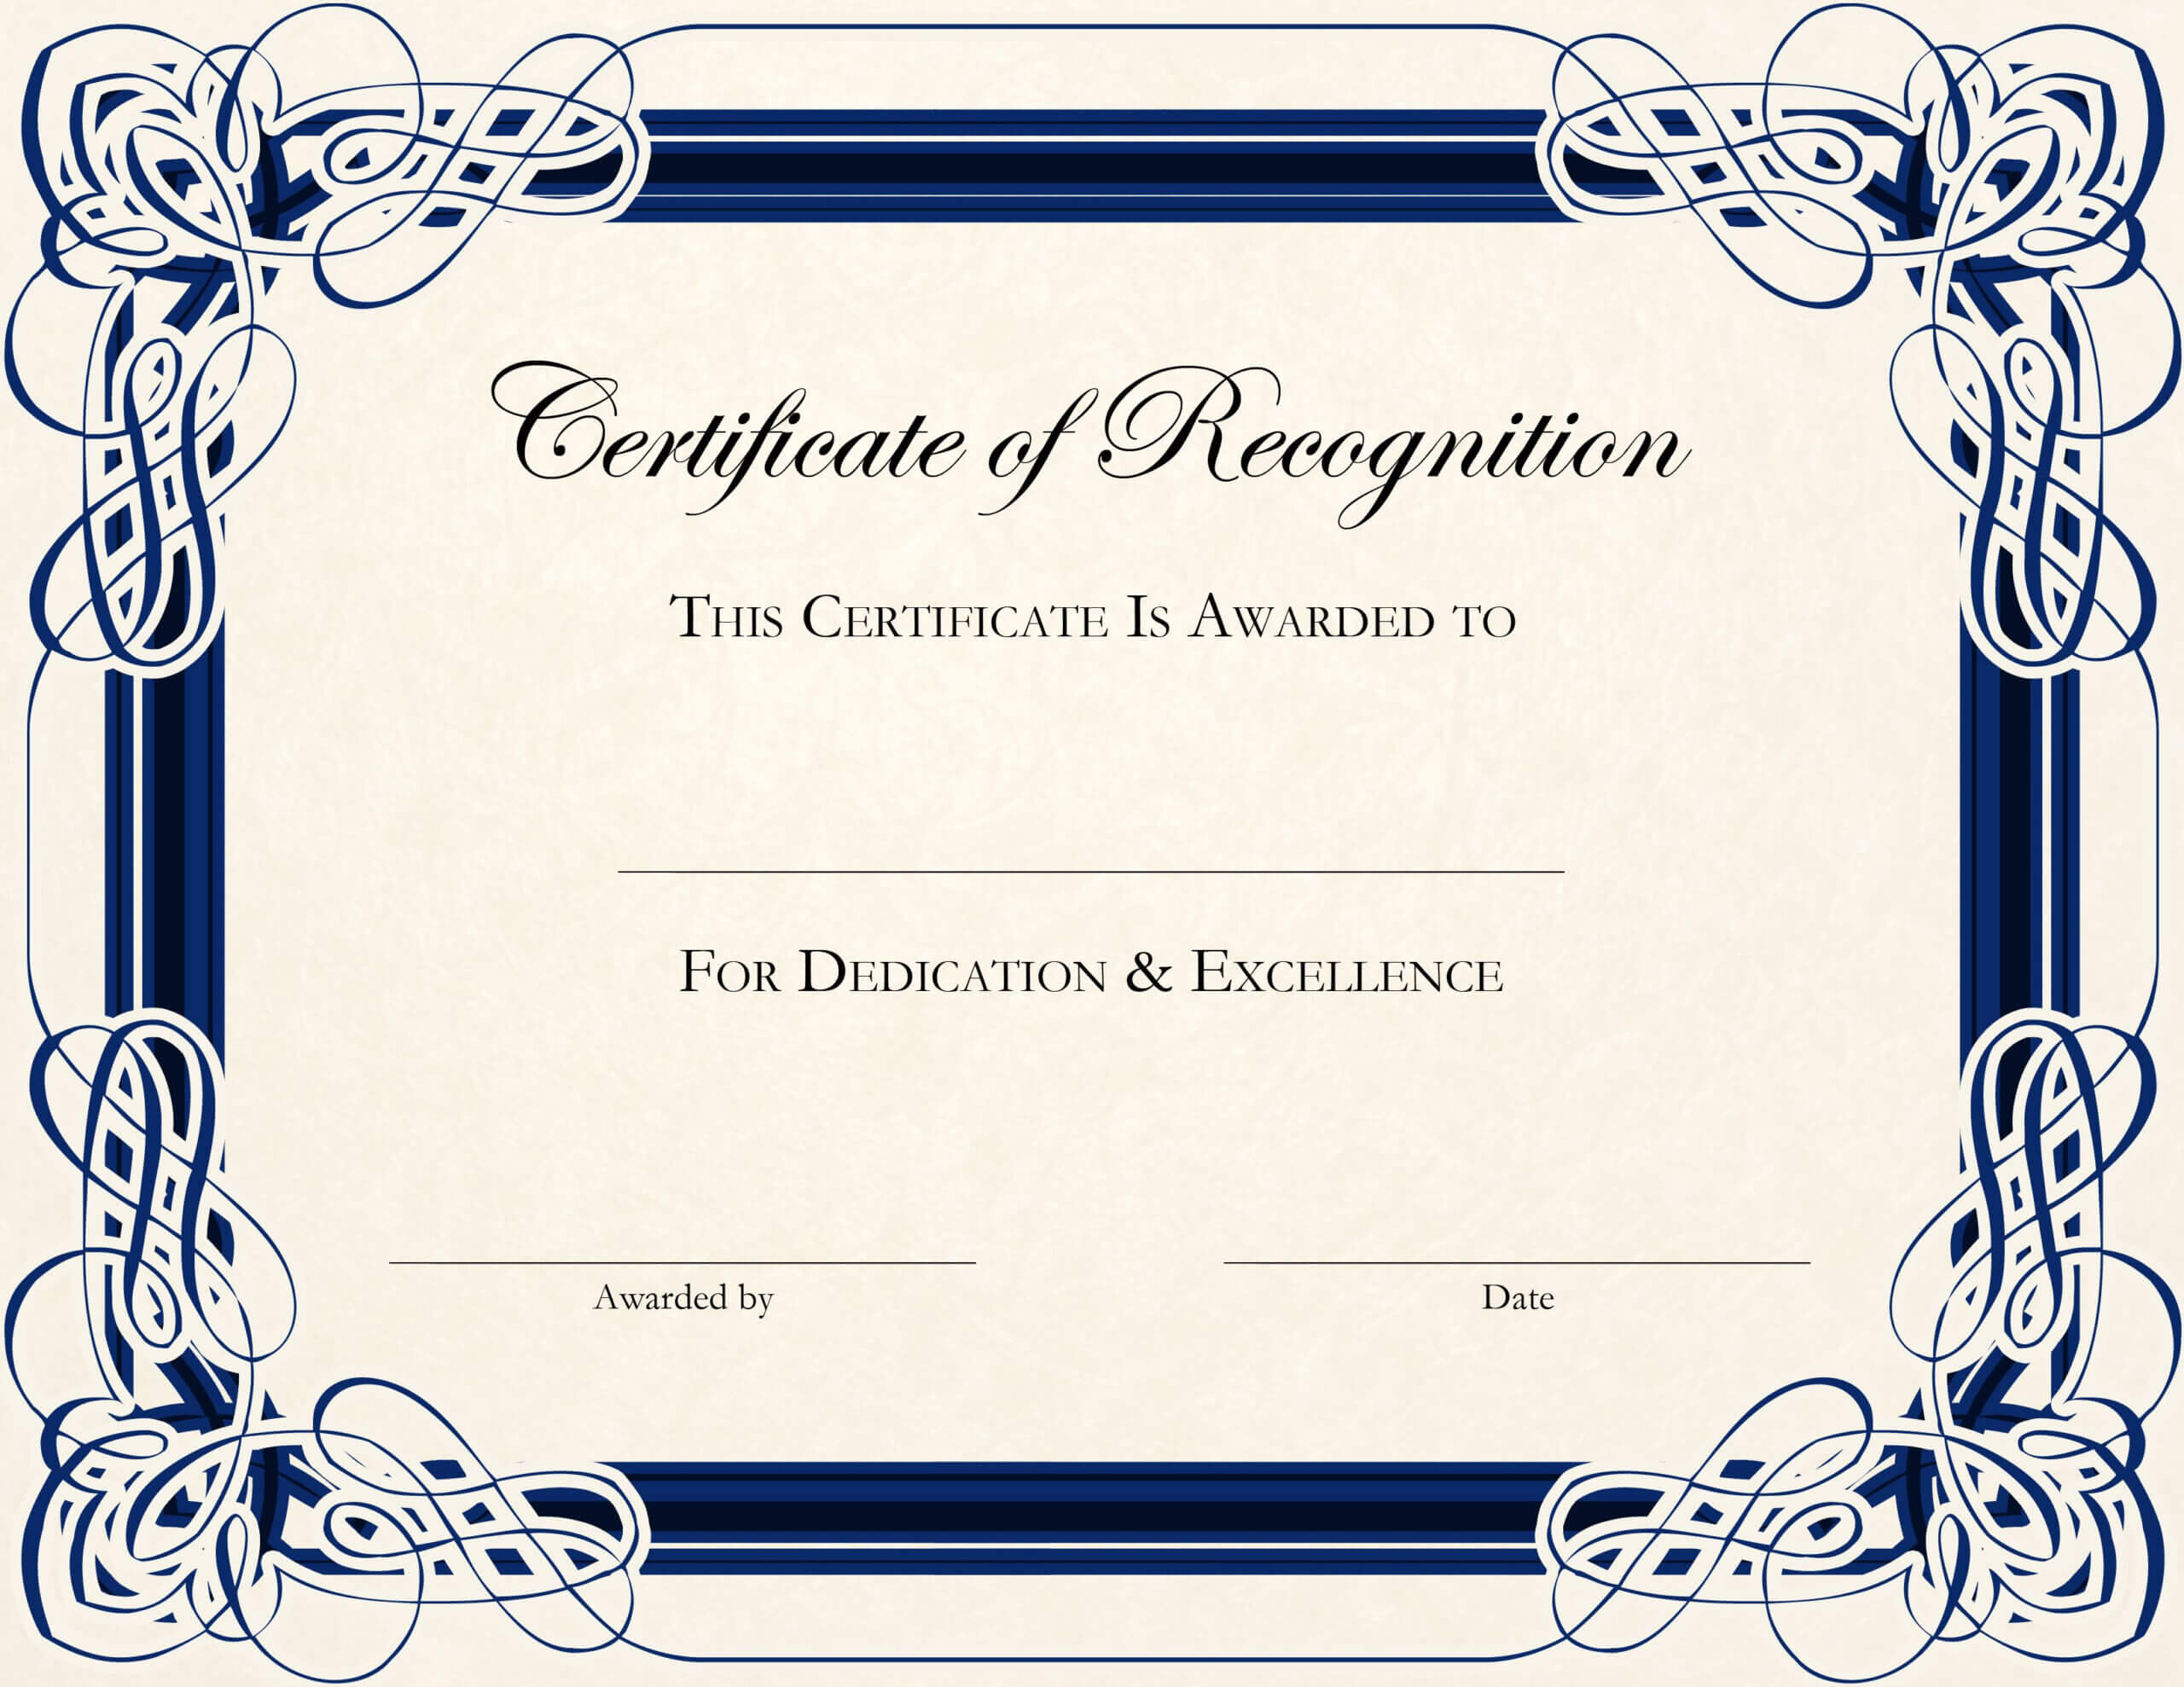 Certificate Of Appreciation Template Word Doc - Calep In Certificate Of Excellence Template Word